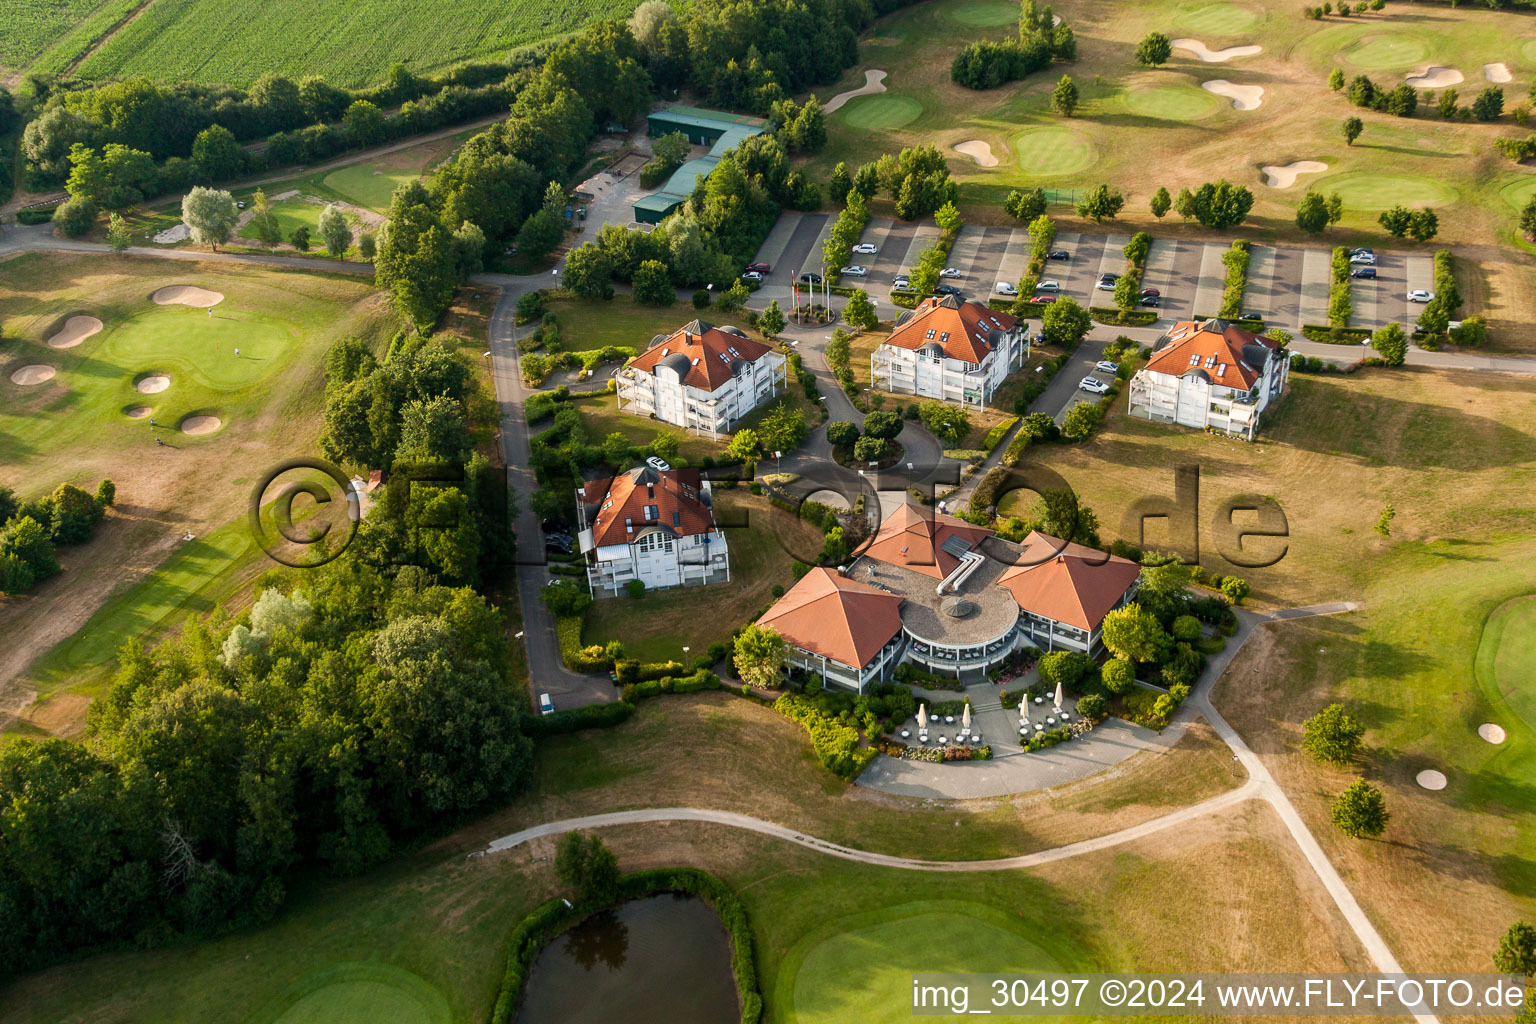 Aerial view of Restaurant at Golf club Soufflenheim Baden-Baden in Soufflenheim in Grand Est, France